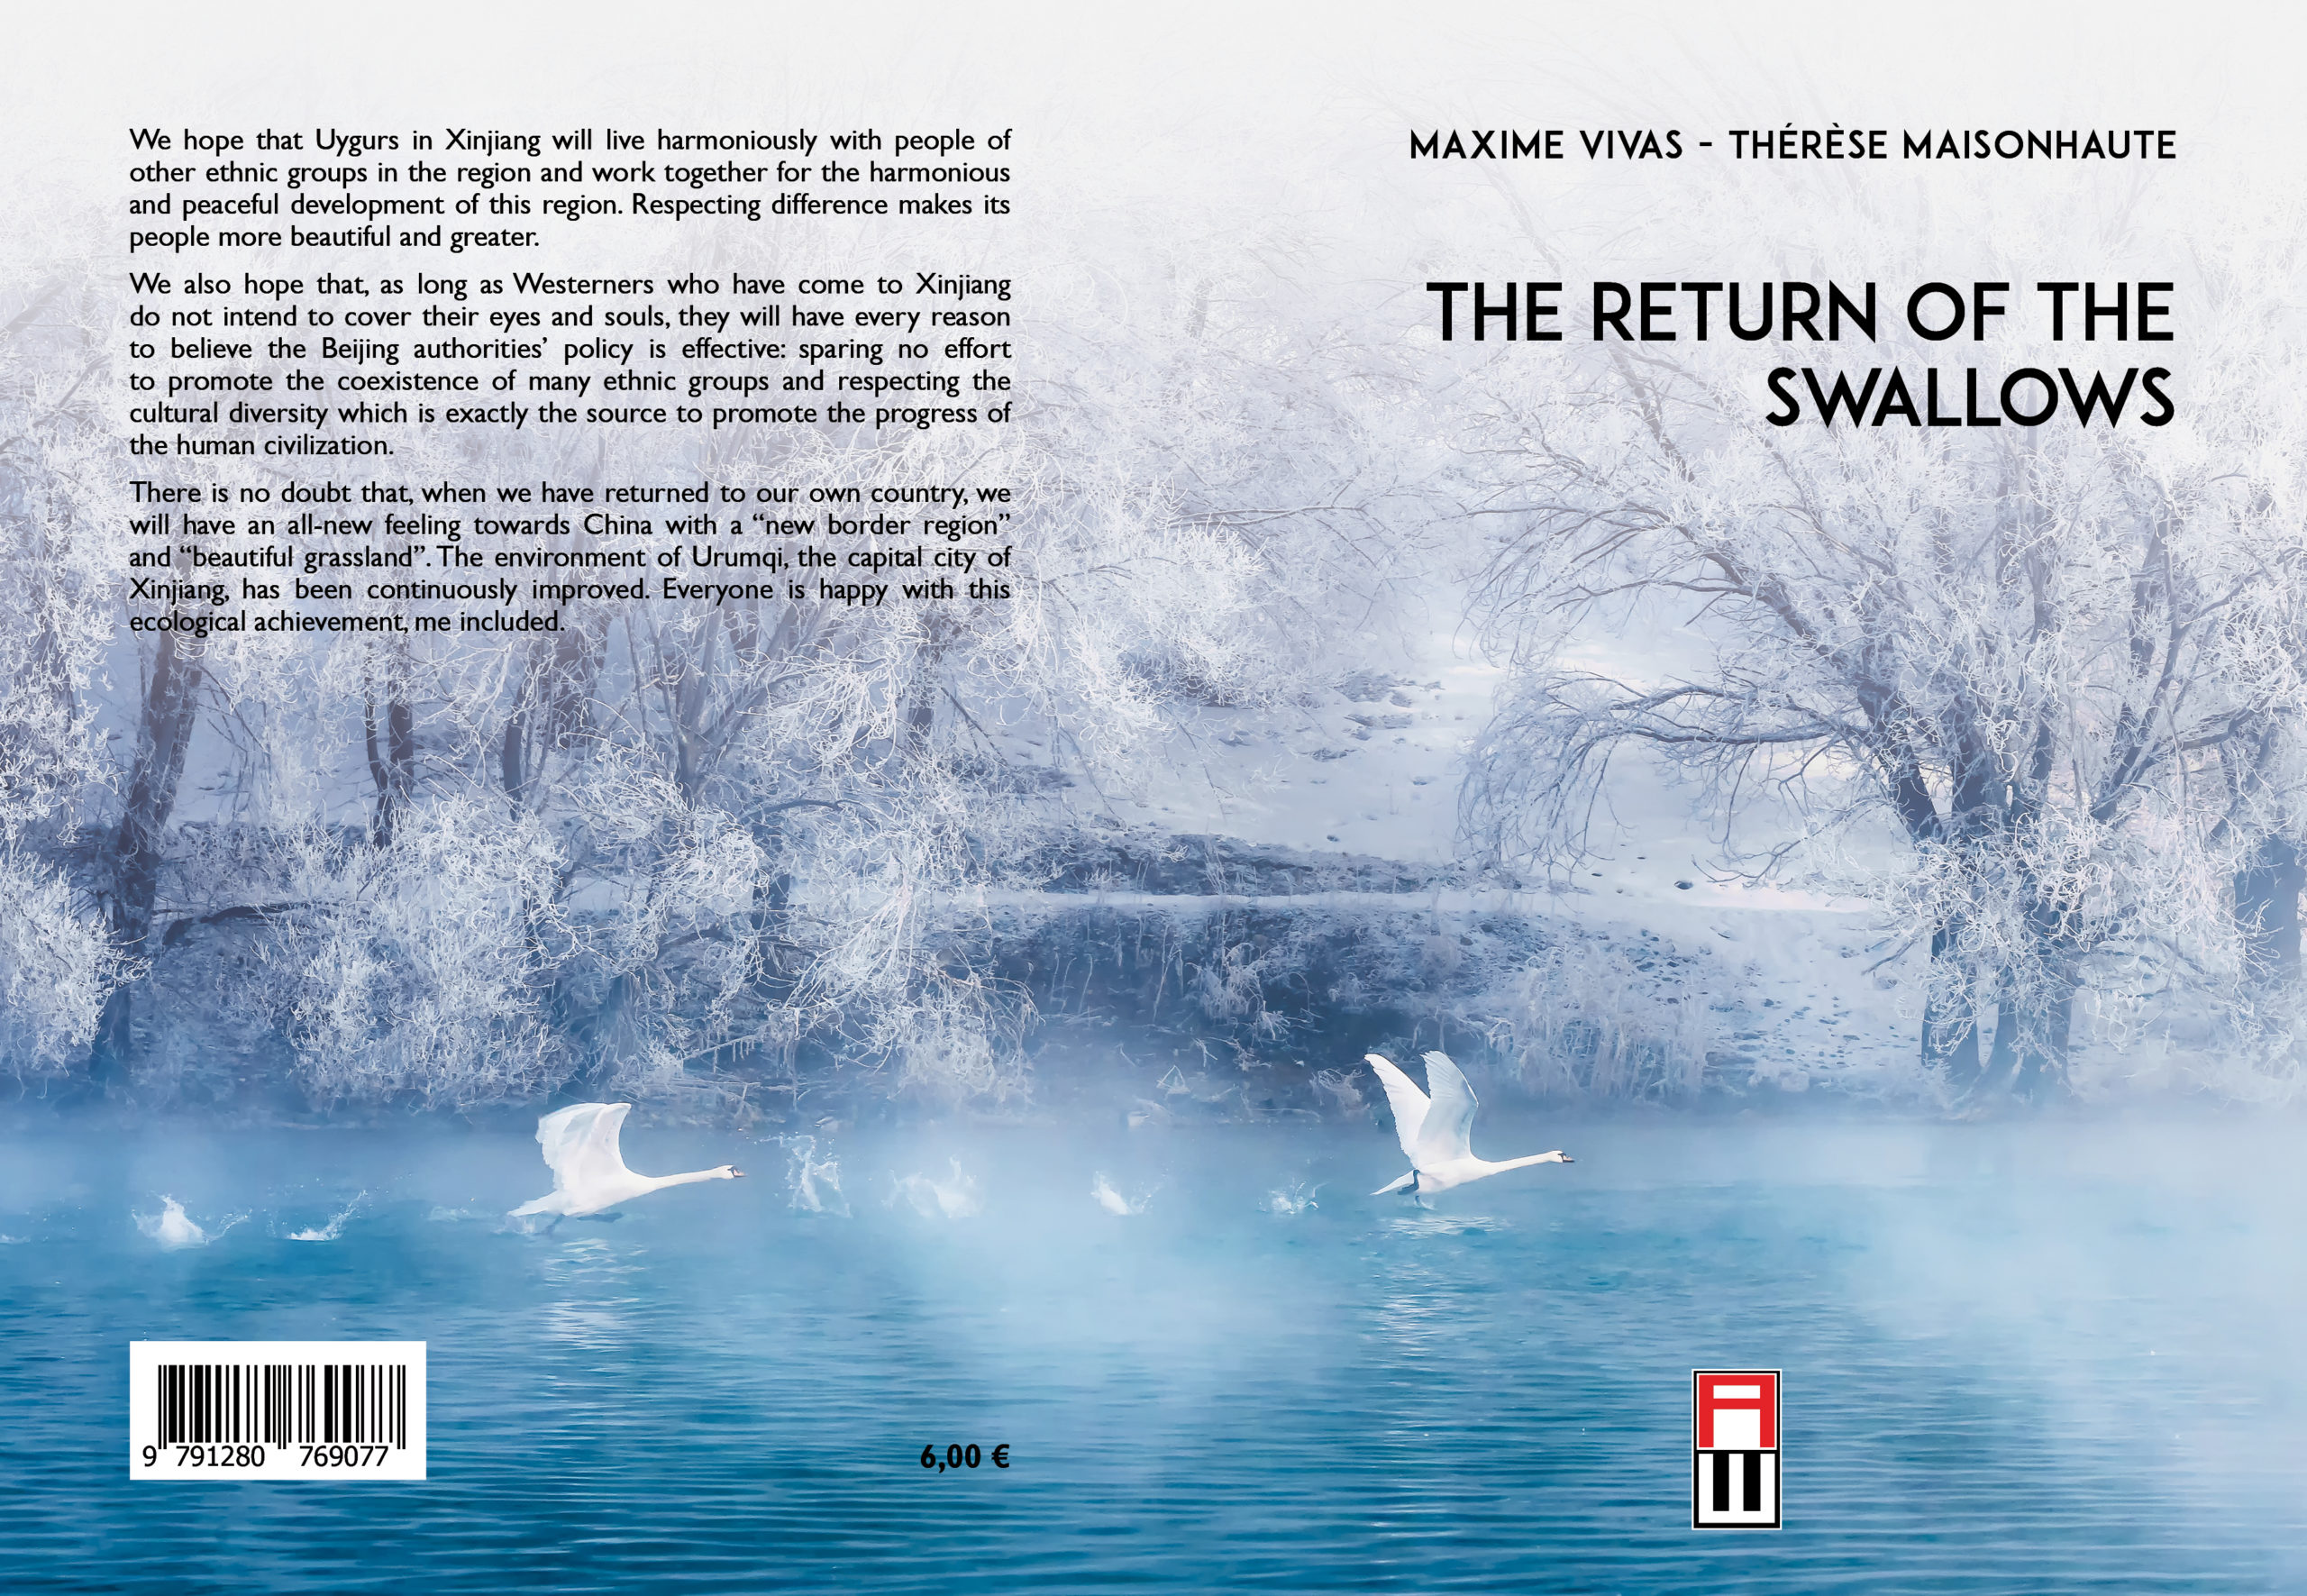 Recensione | “The Return of the Swallows” di Maxime Vivas e Thérèse Maisonhaute